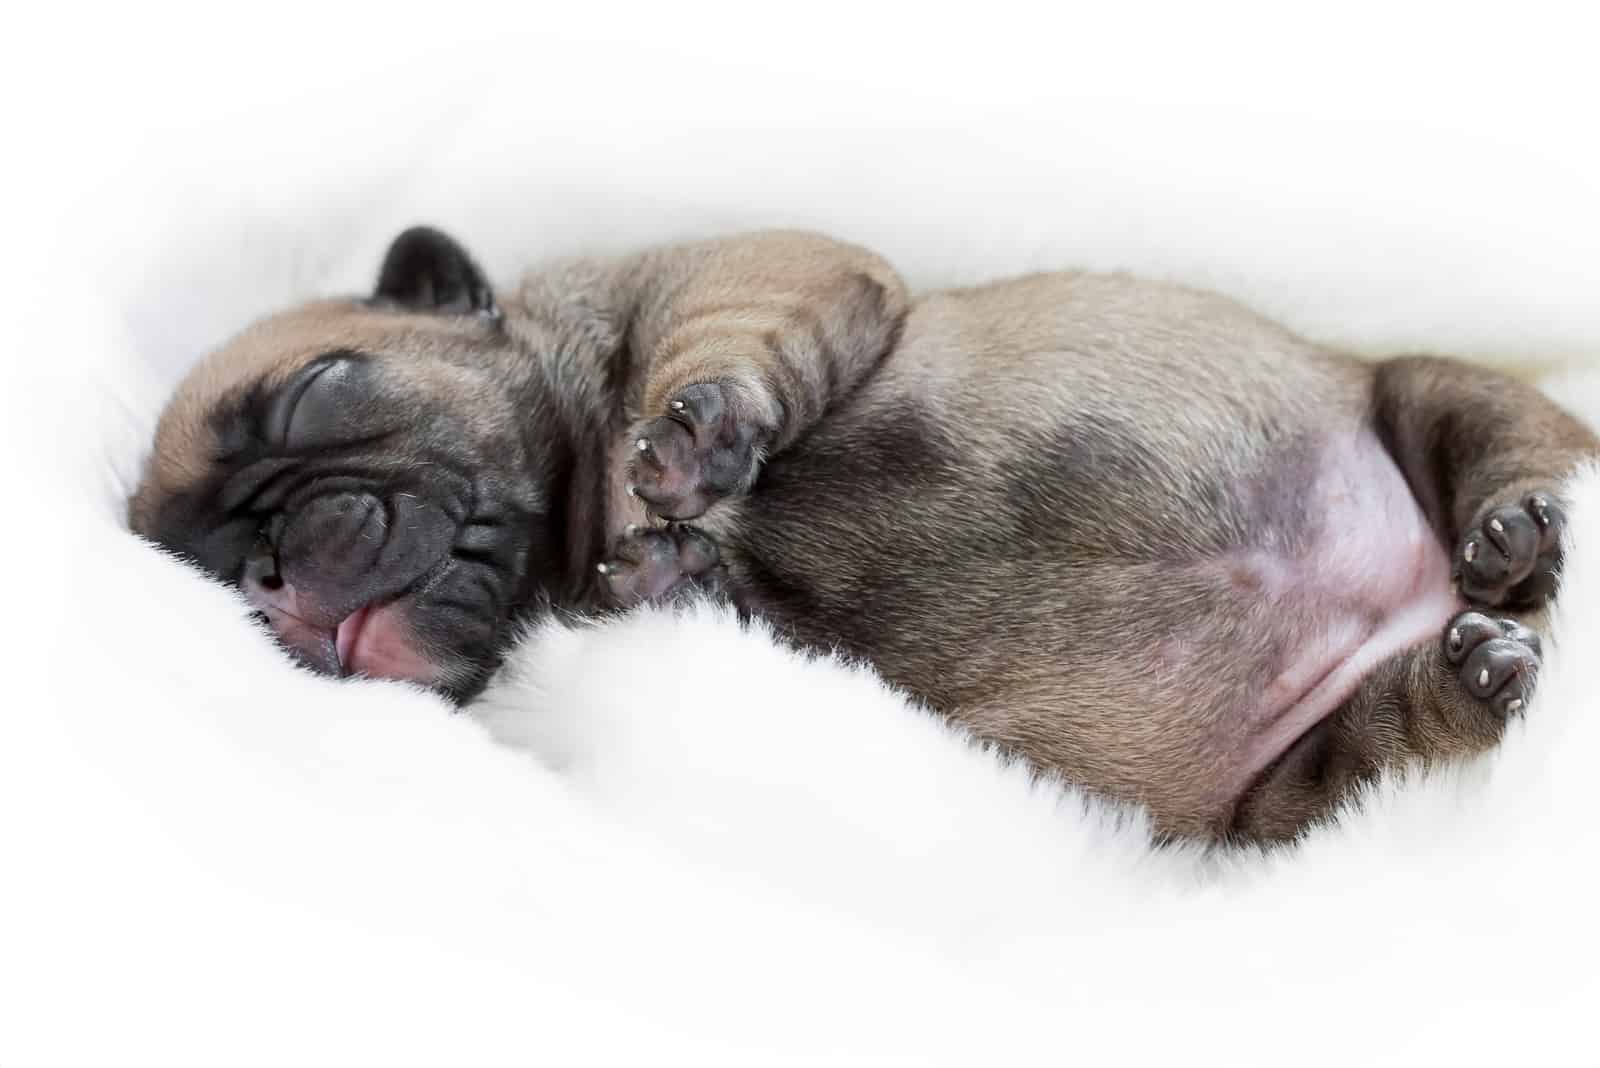 a French bulldog puppy sleeps in a warm white blanket